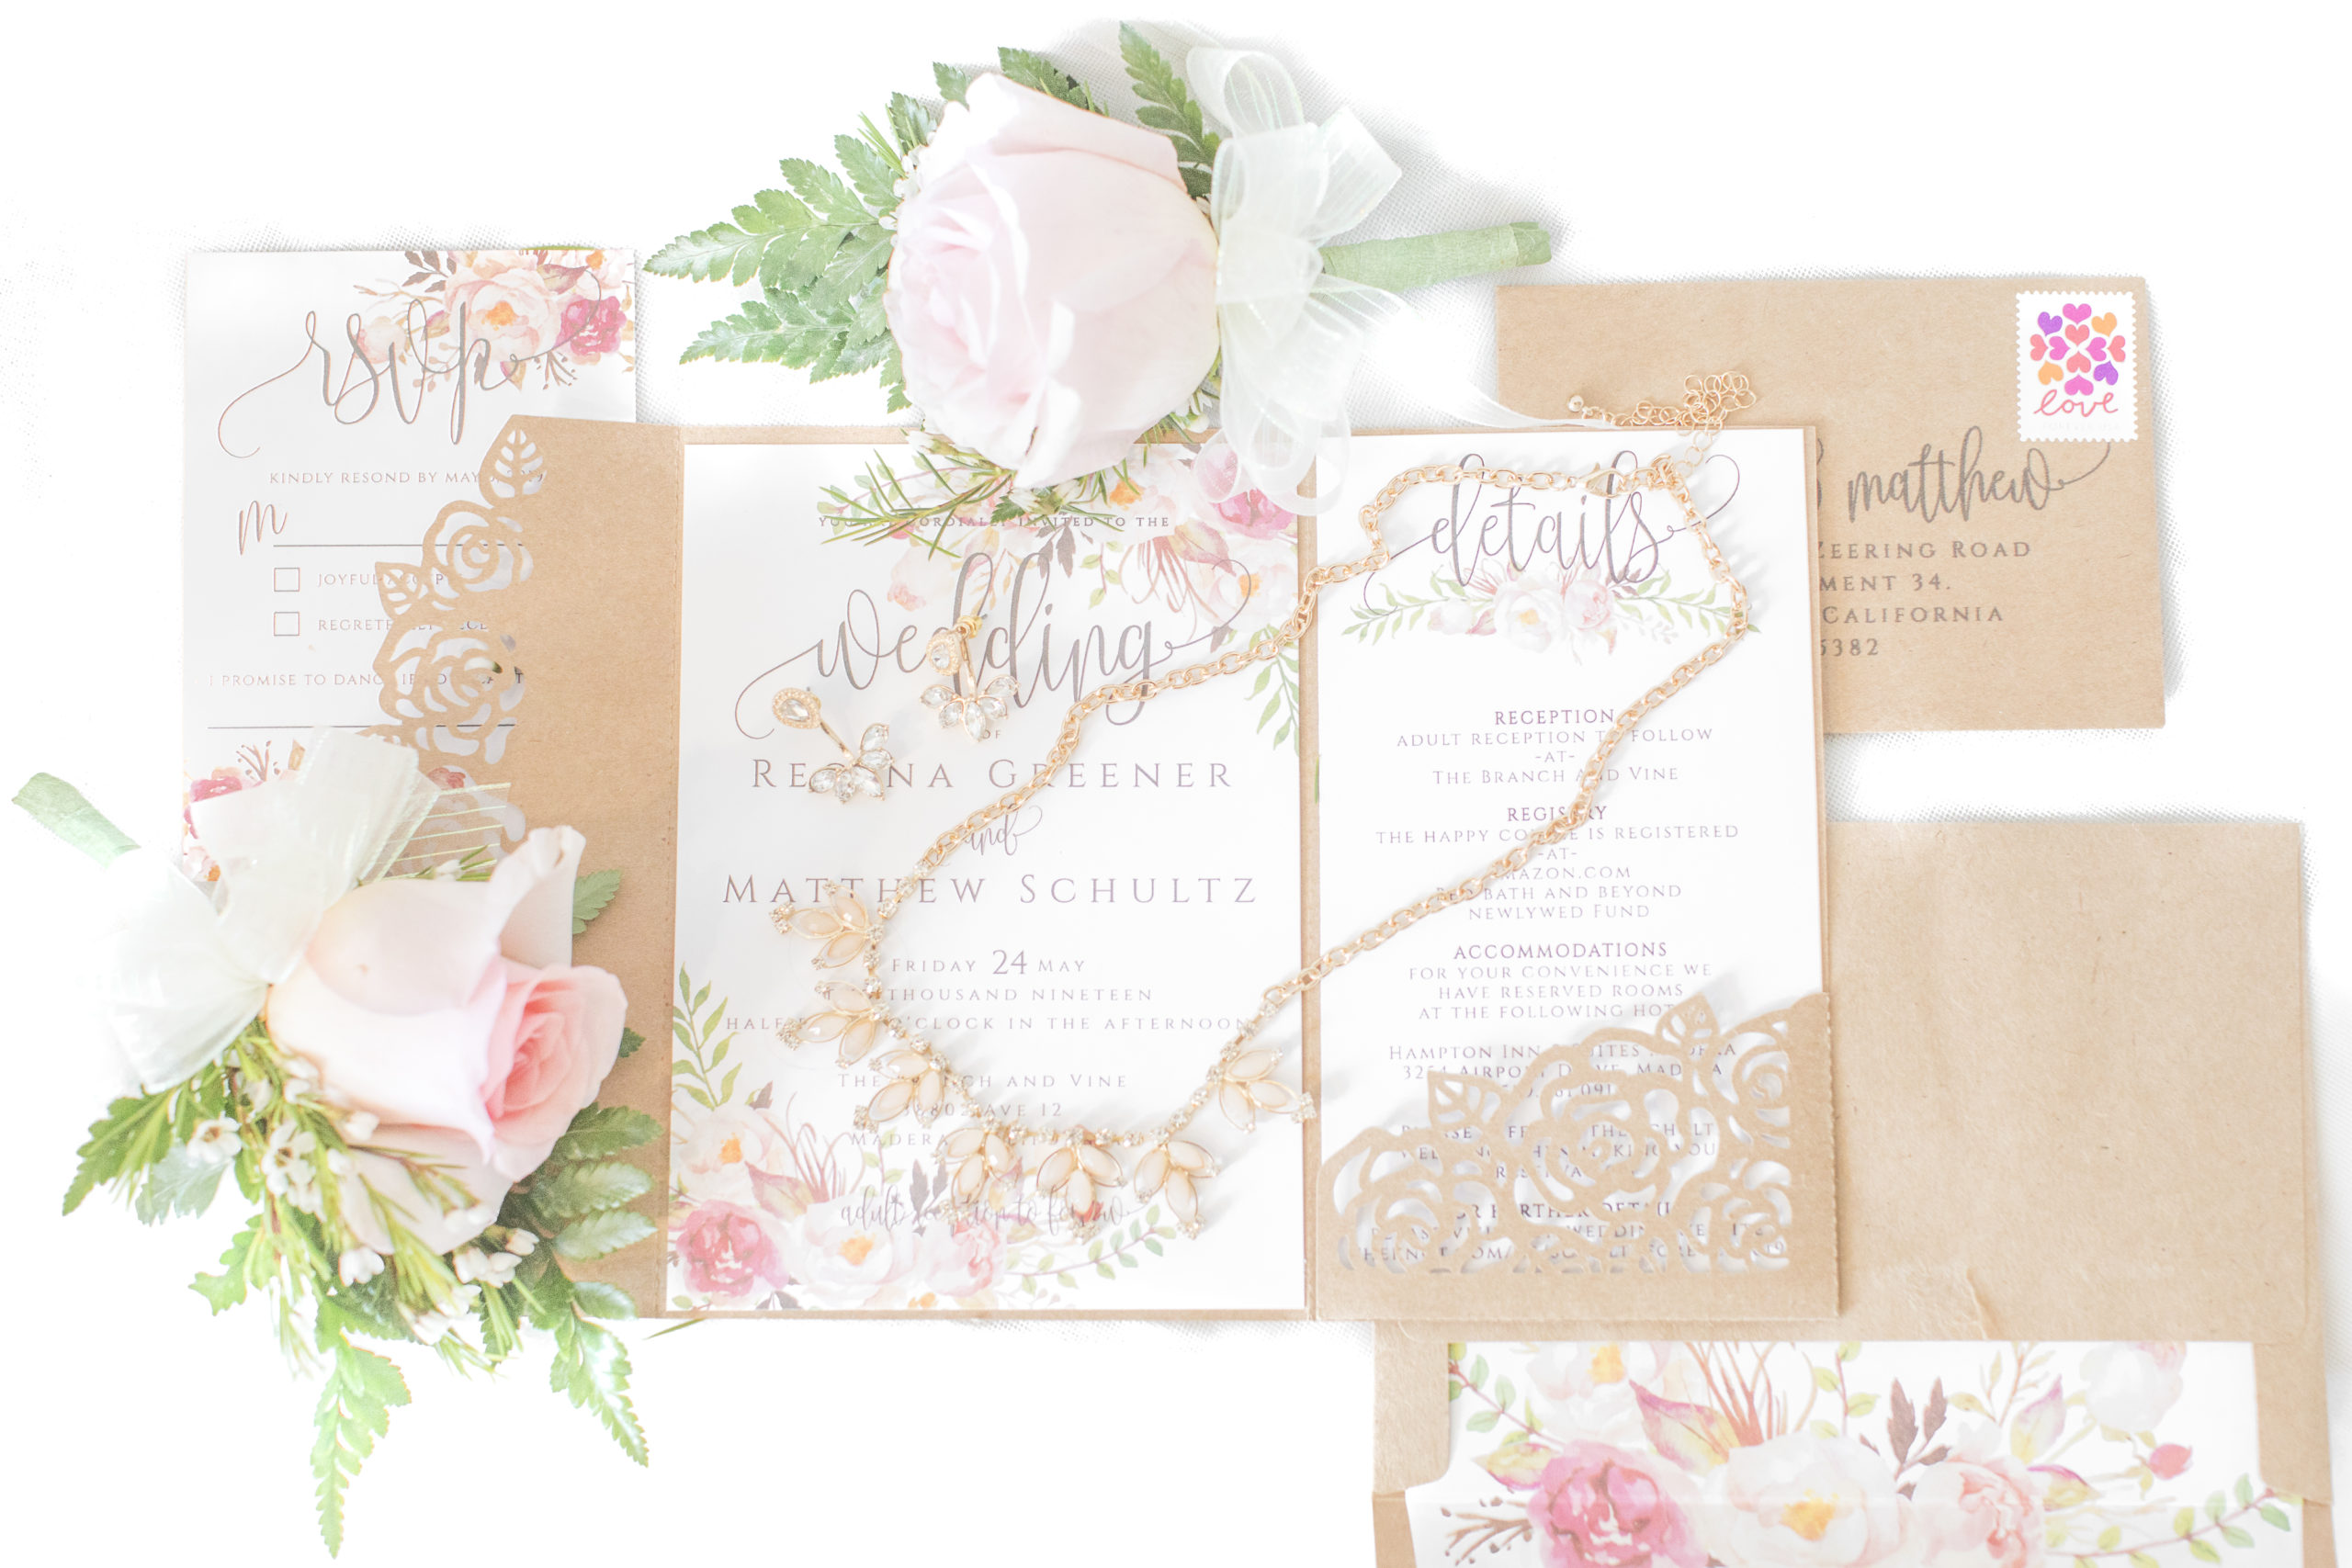 A teal Branch and Vine Wedding bridal details